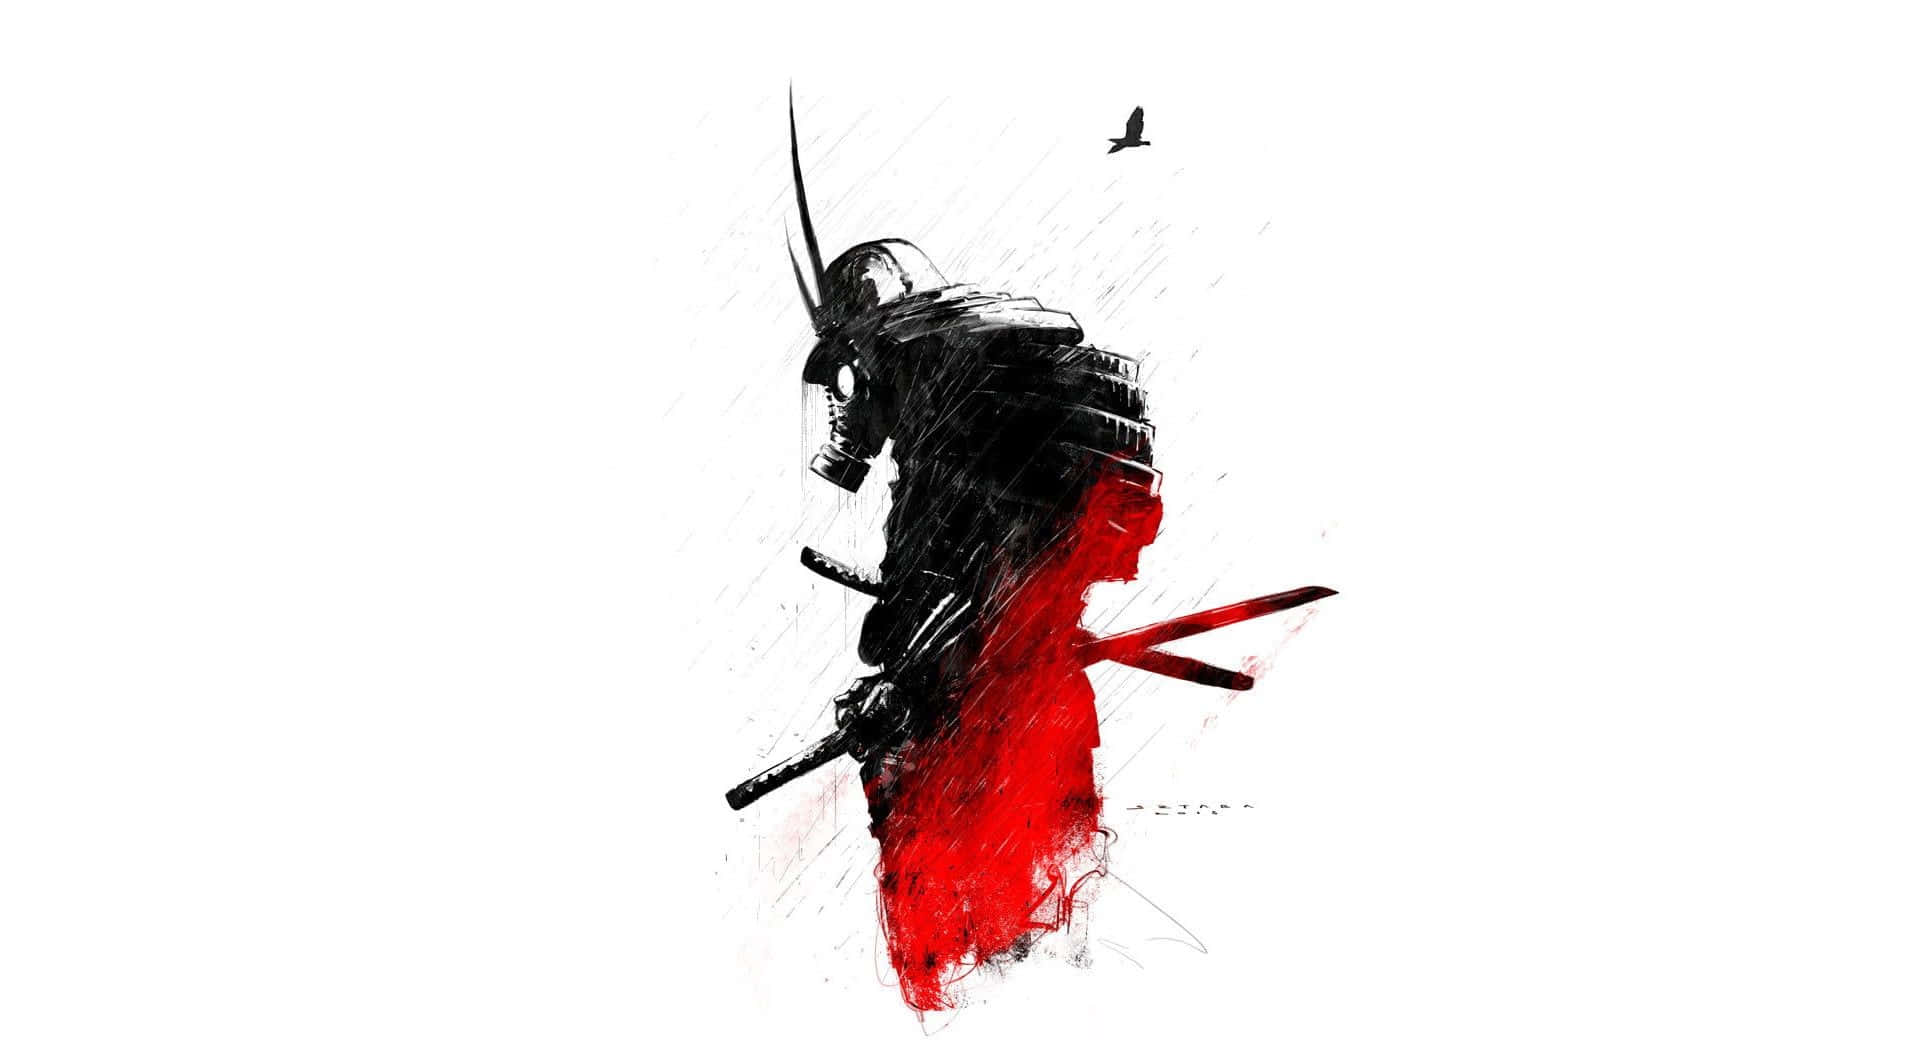 Intense Black and White Samurai Battle Scene Wallpaper